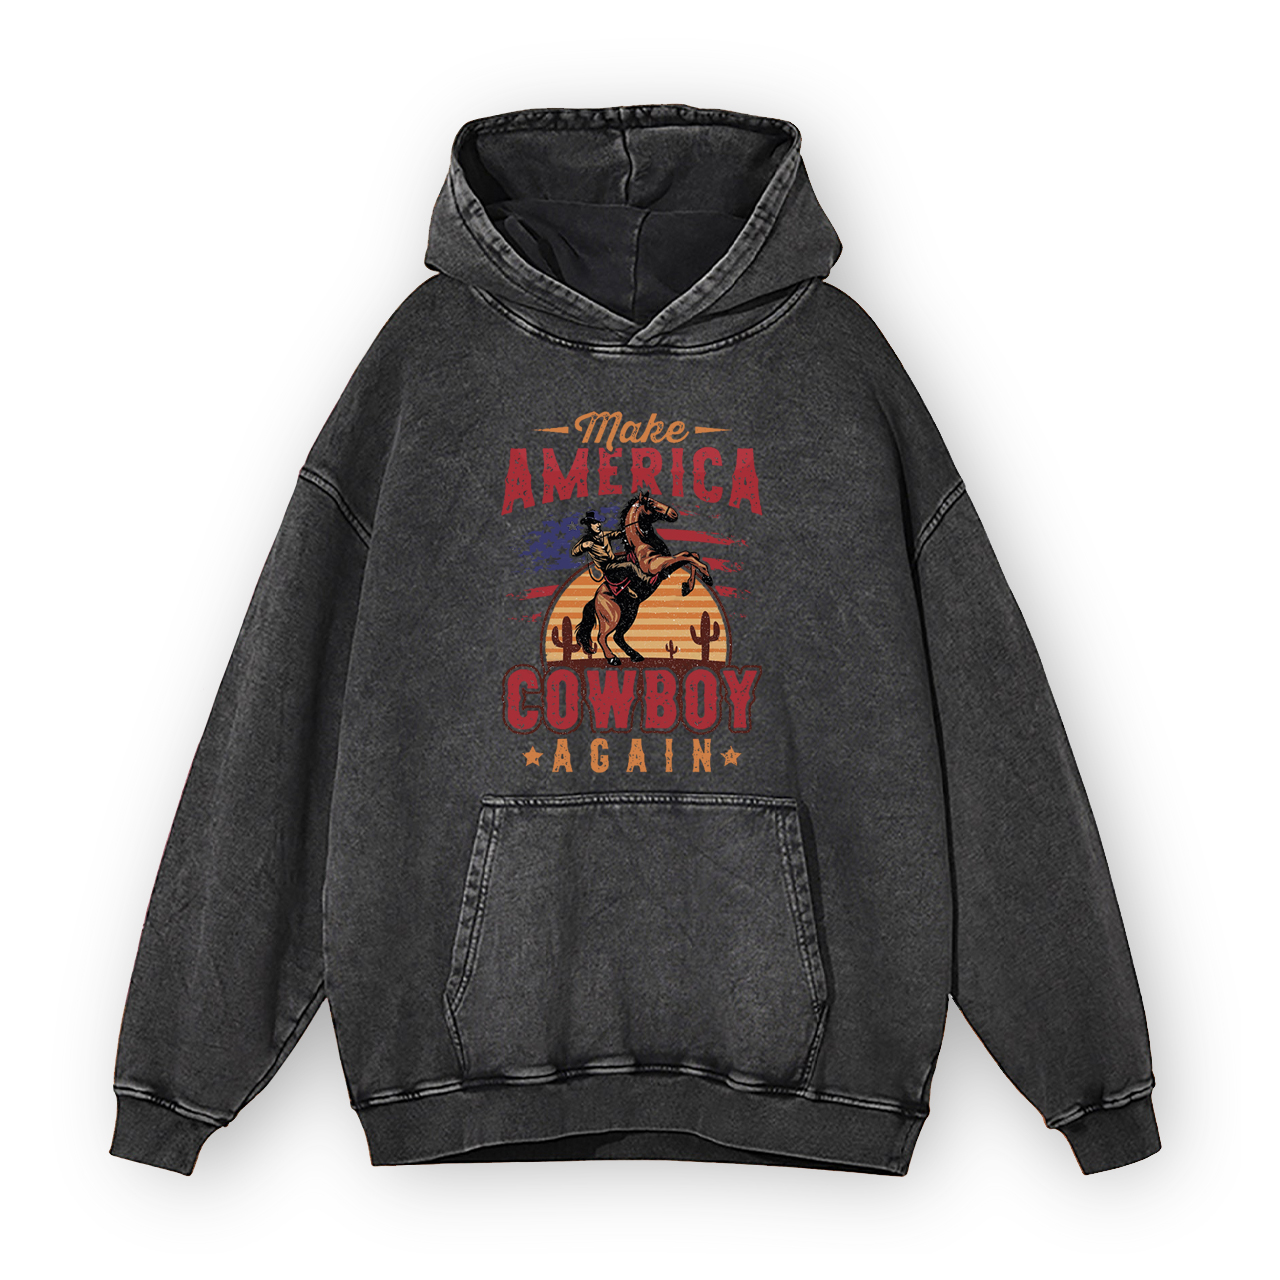 Make America Cowboy Again Garment-Dye Hoodies